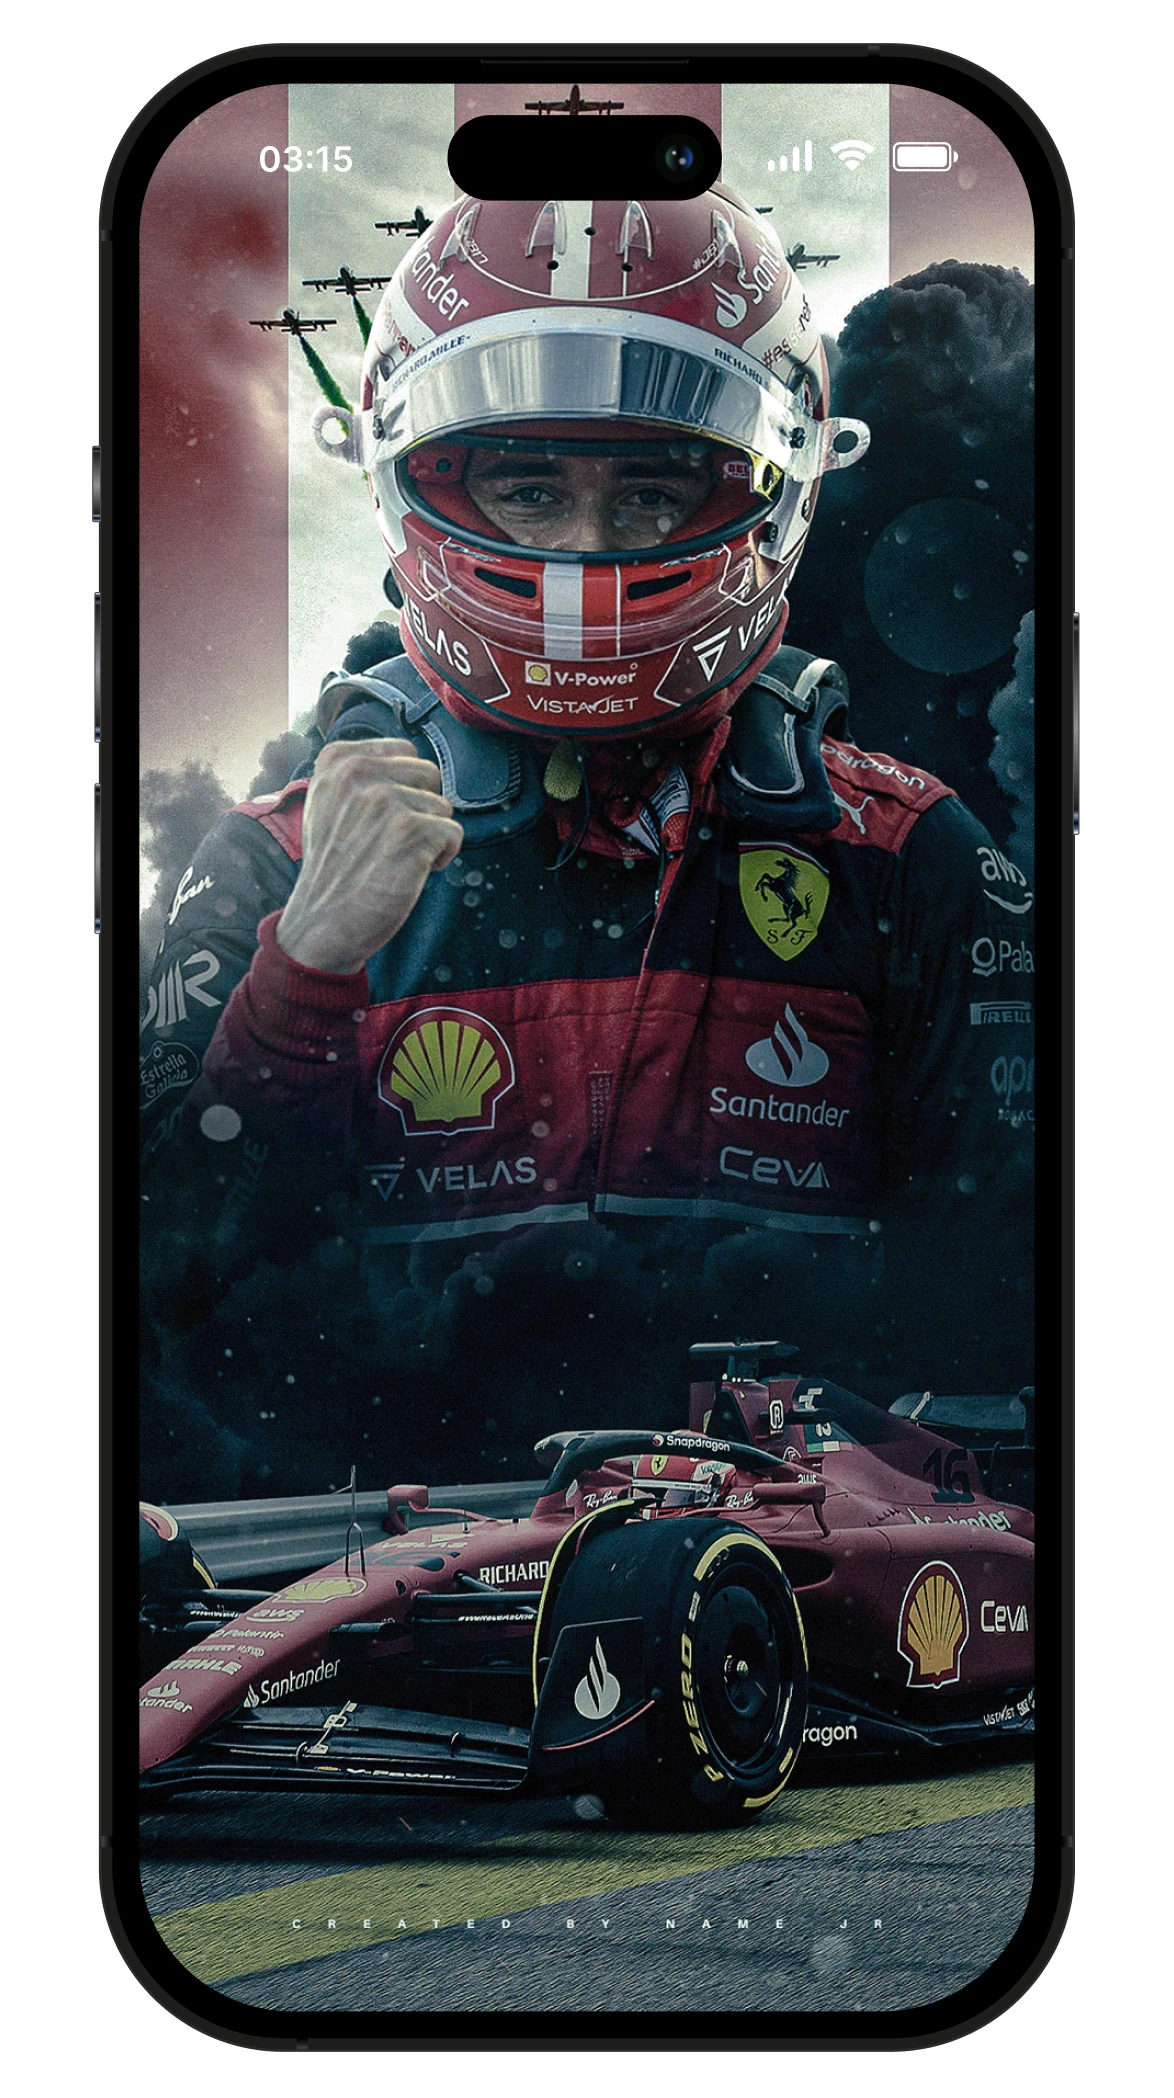 Ferrari F1 Pilot Wallpaper for iPhone